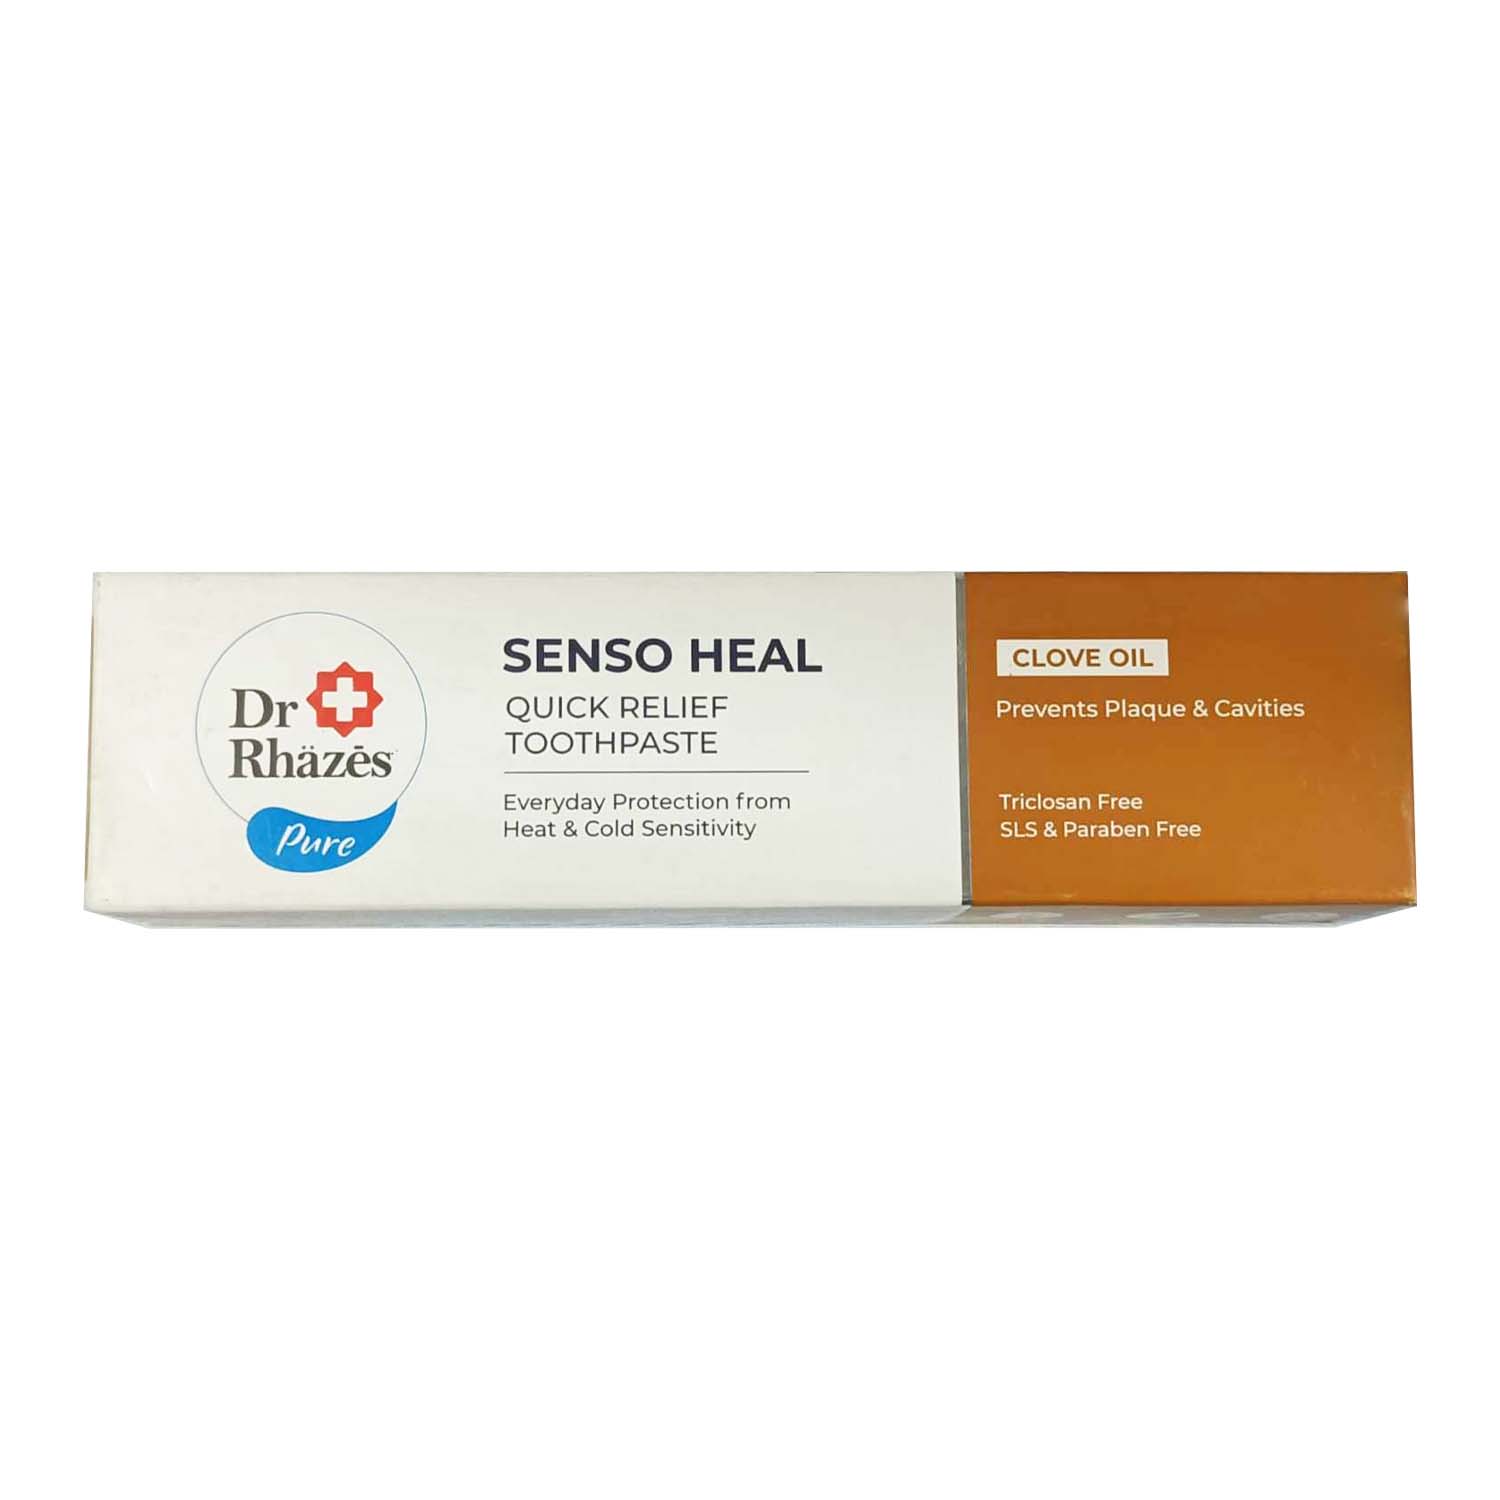 Dr Rhazes Senso Heal Quick Relief Toothpaste (75ml) - Clove Oil